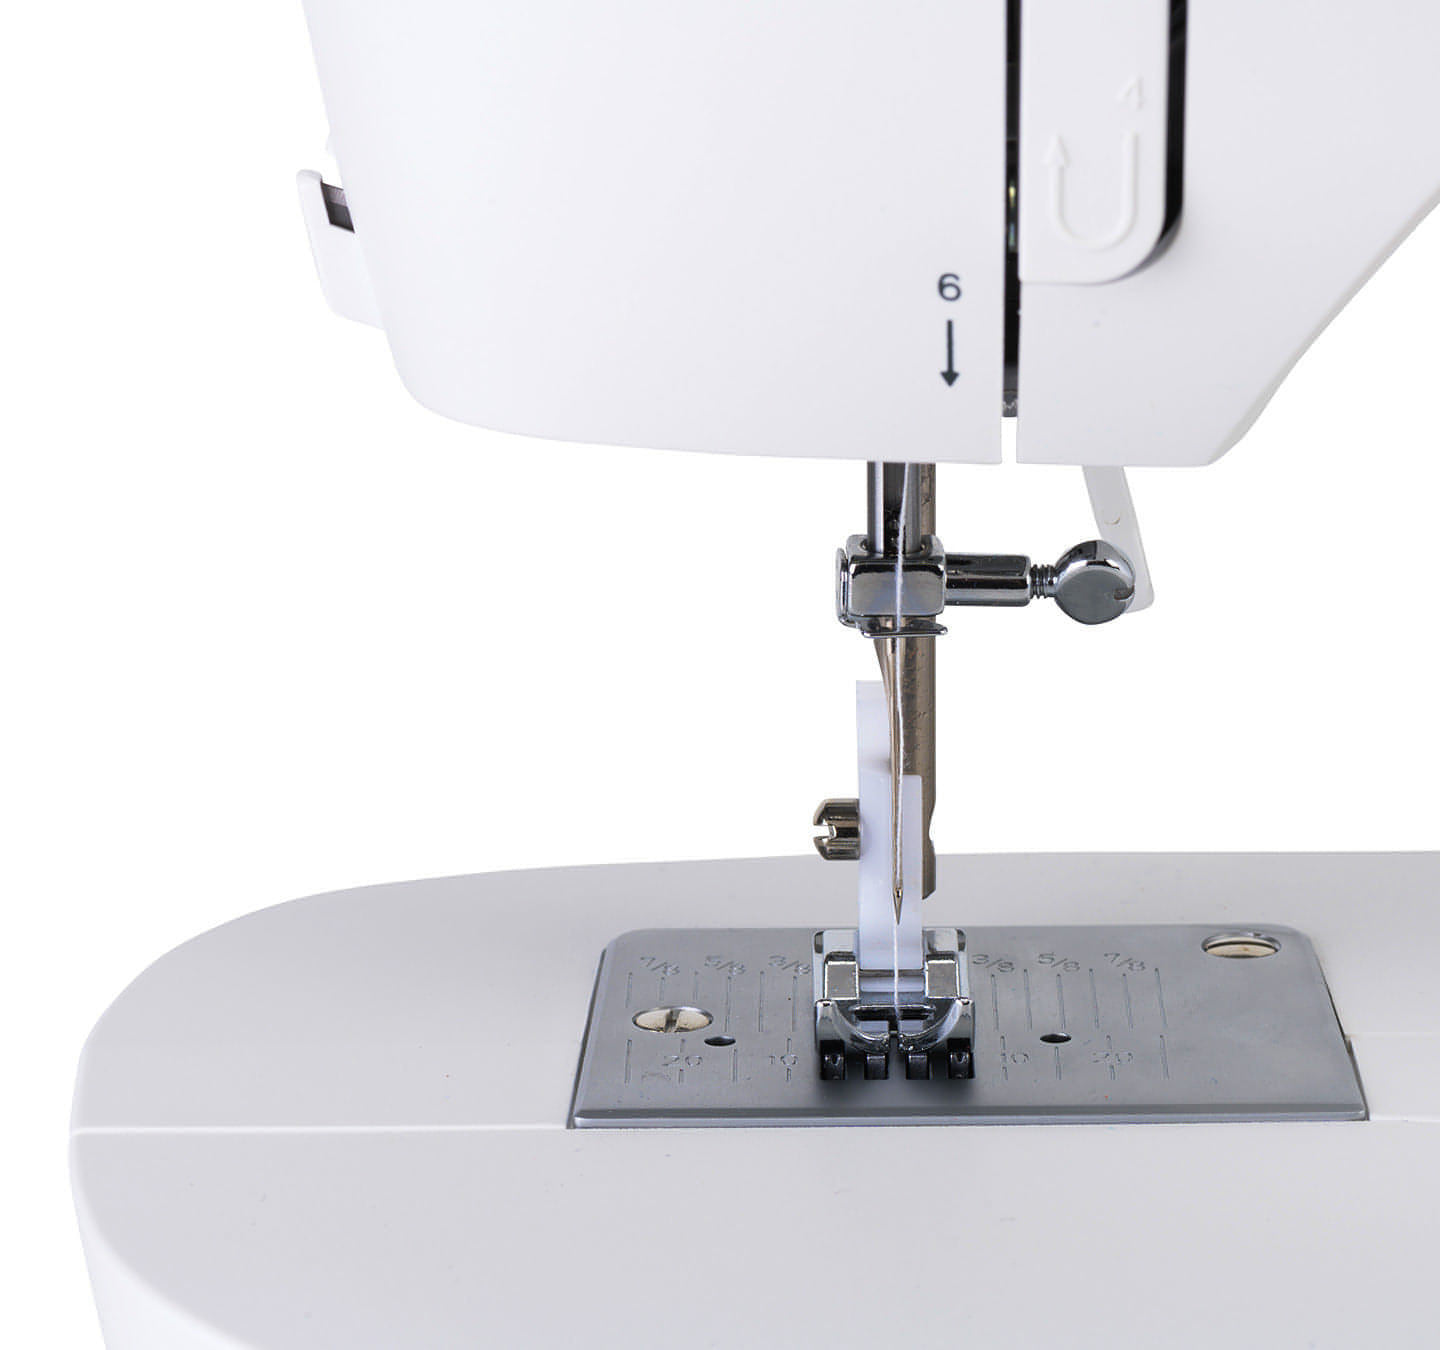 Singer M16 Sewing Machine - Easy to use beginner to intermediate machine